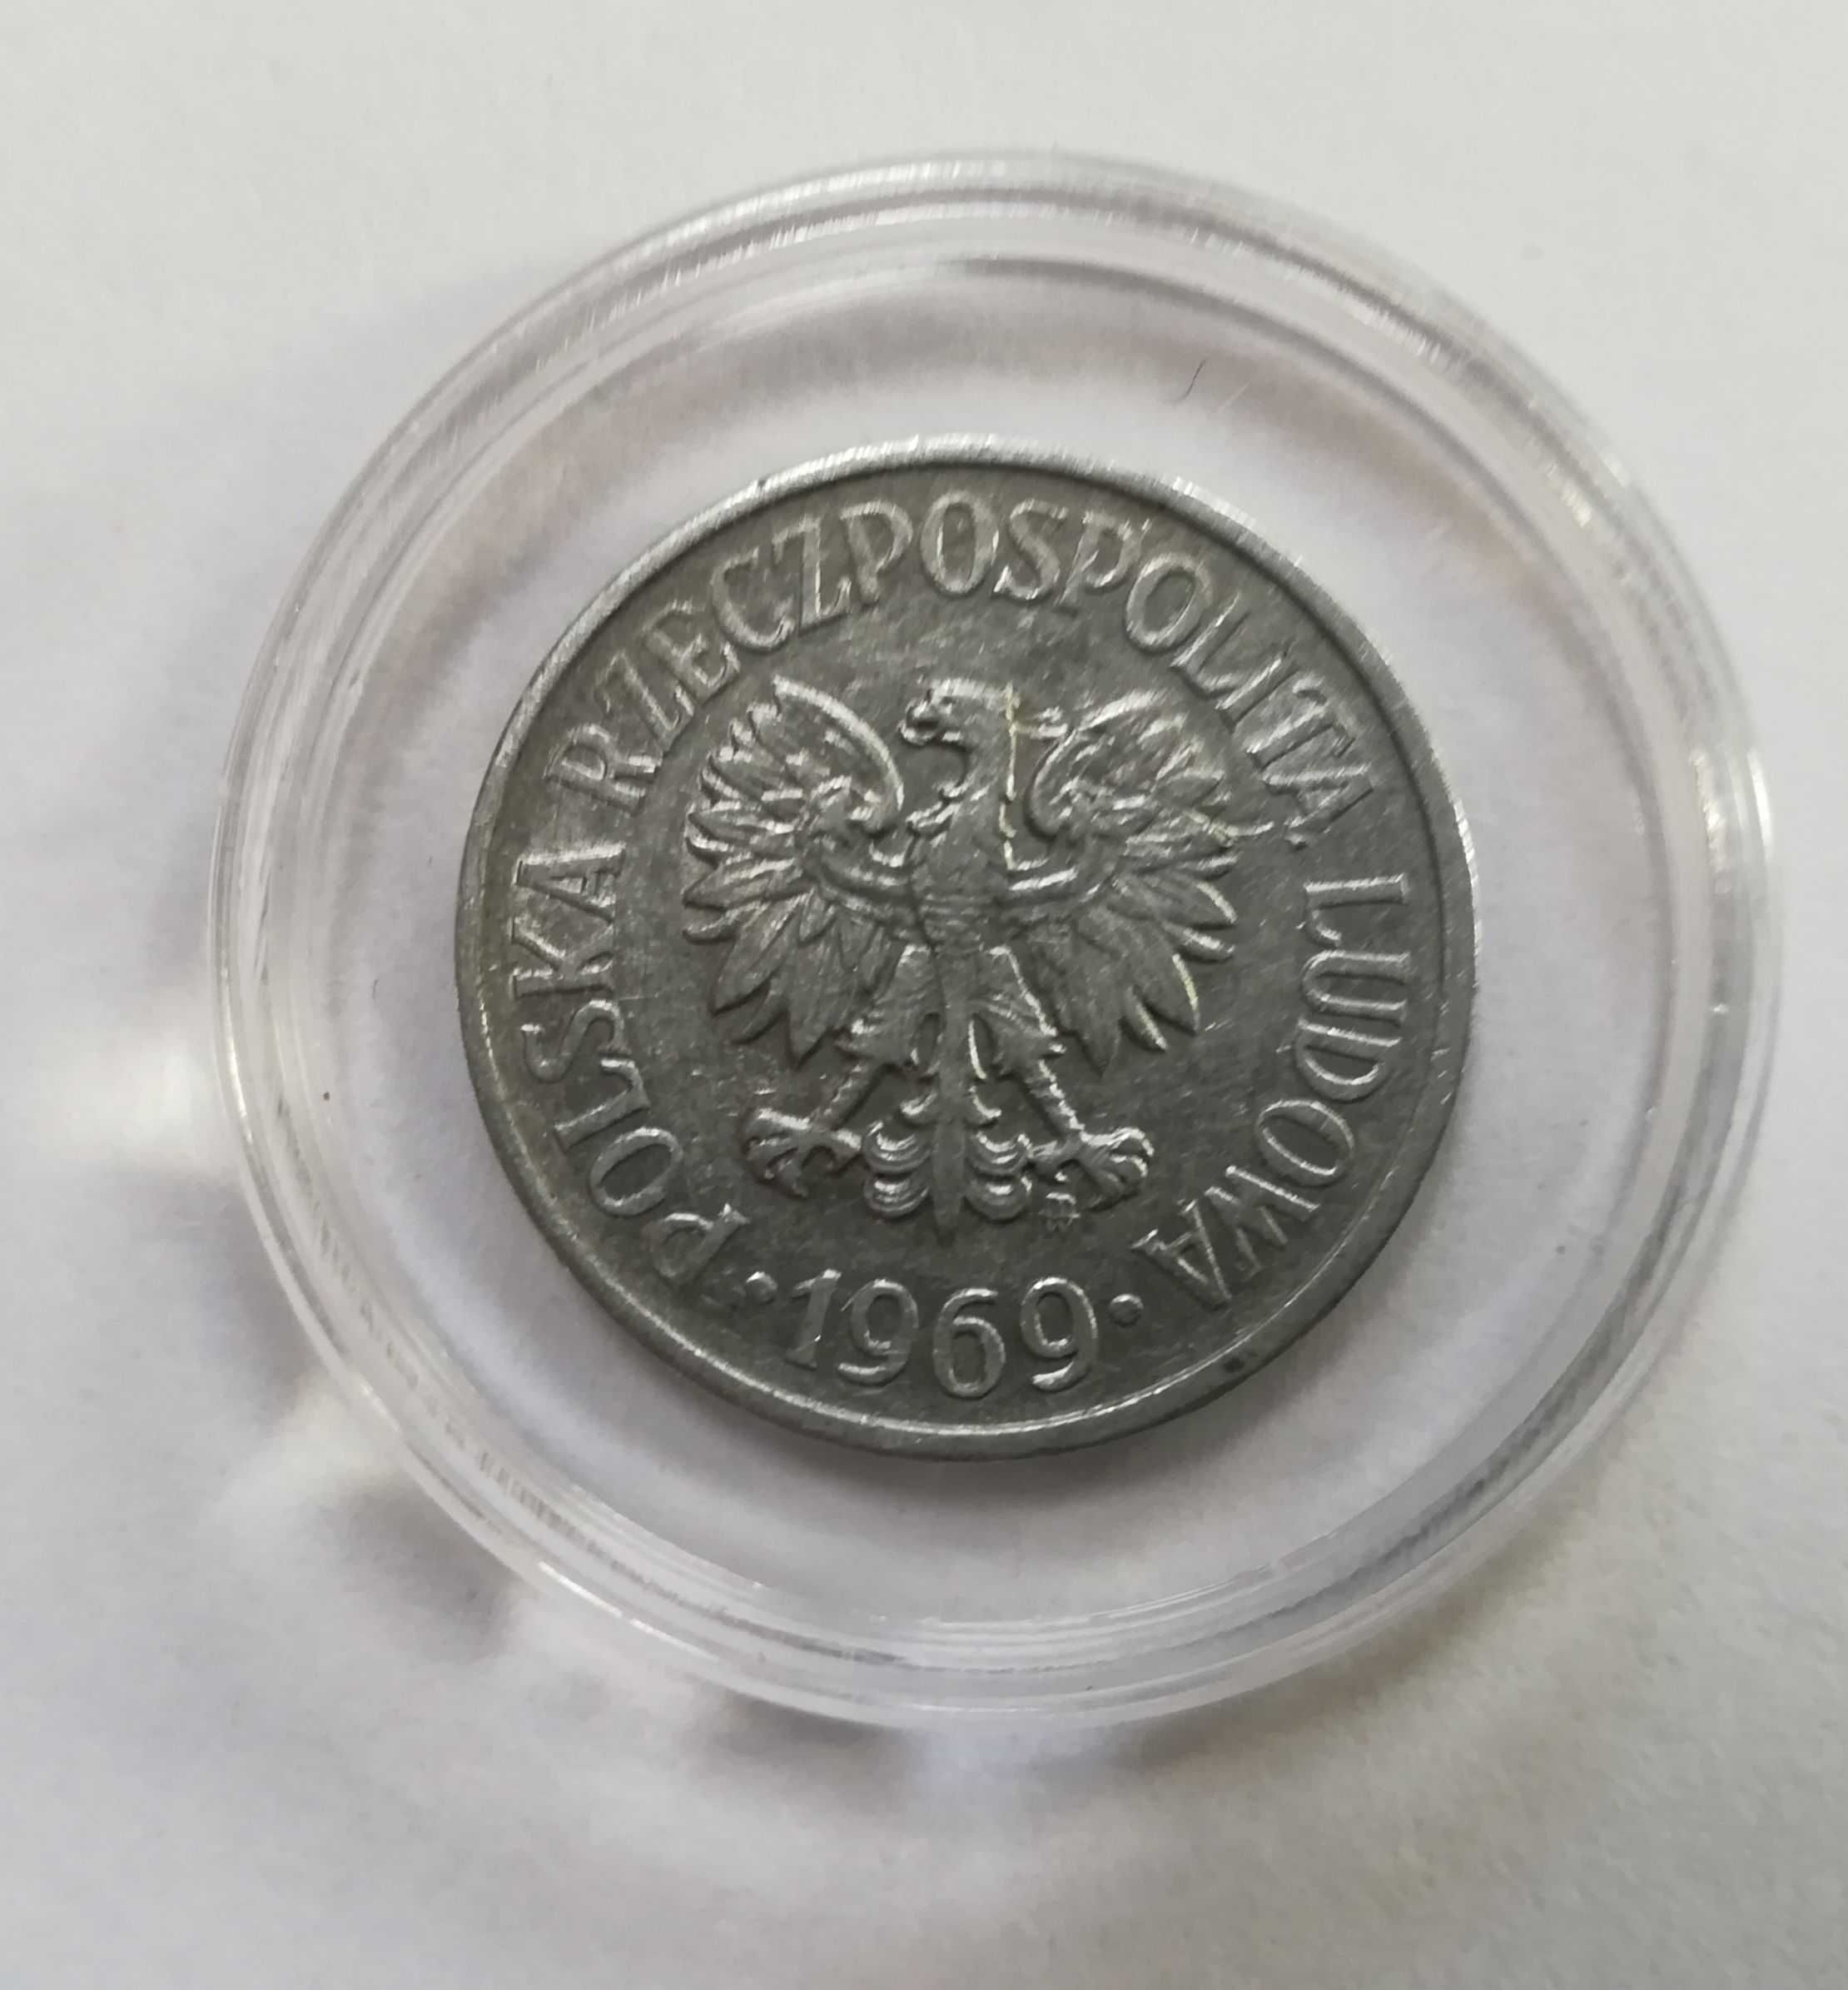 Moneta 20 gr z 1969 r z destruktem. Stan b. dobry